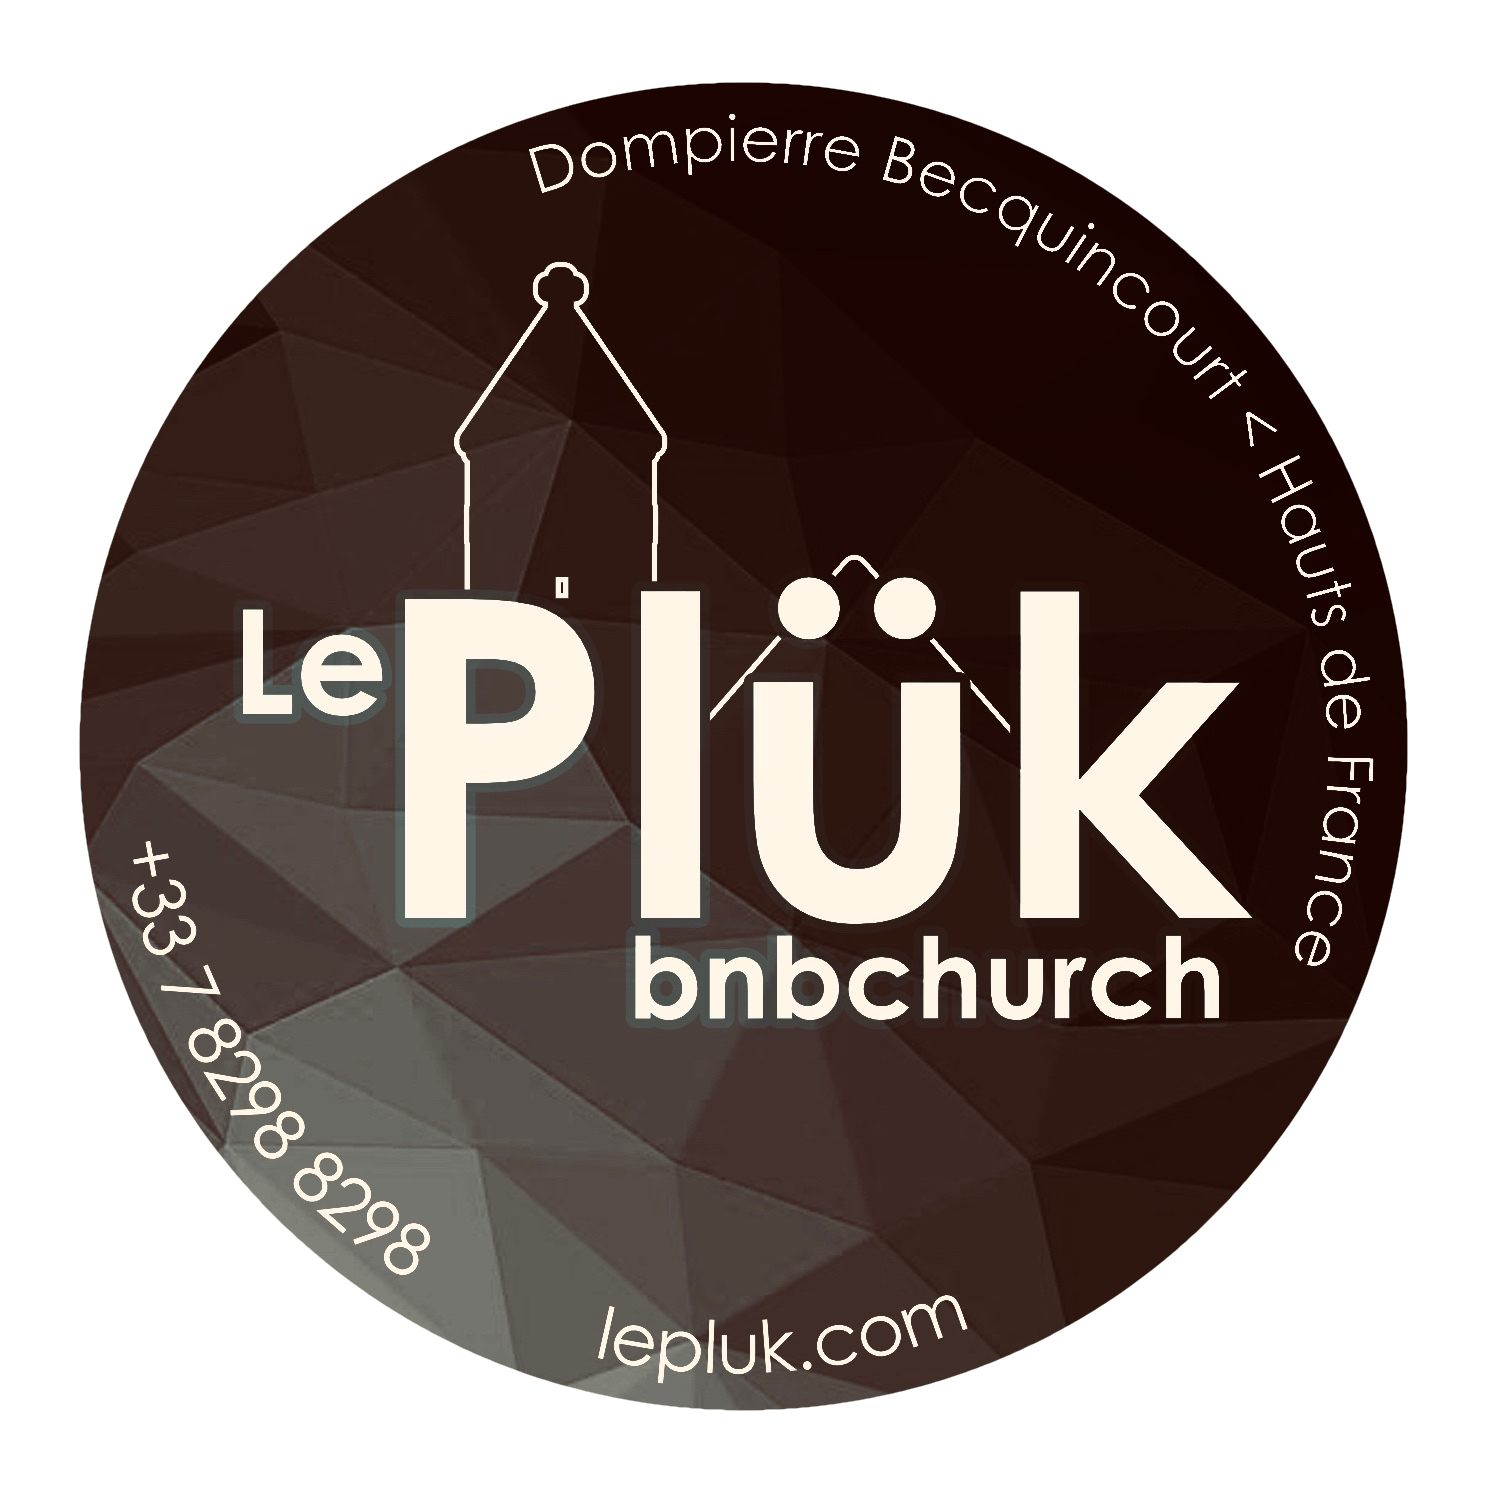 Le Plük bnbchurch